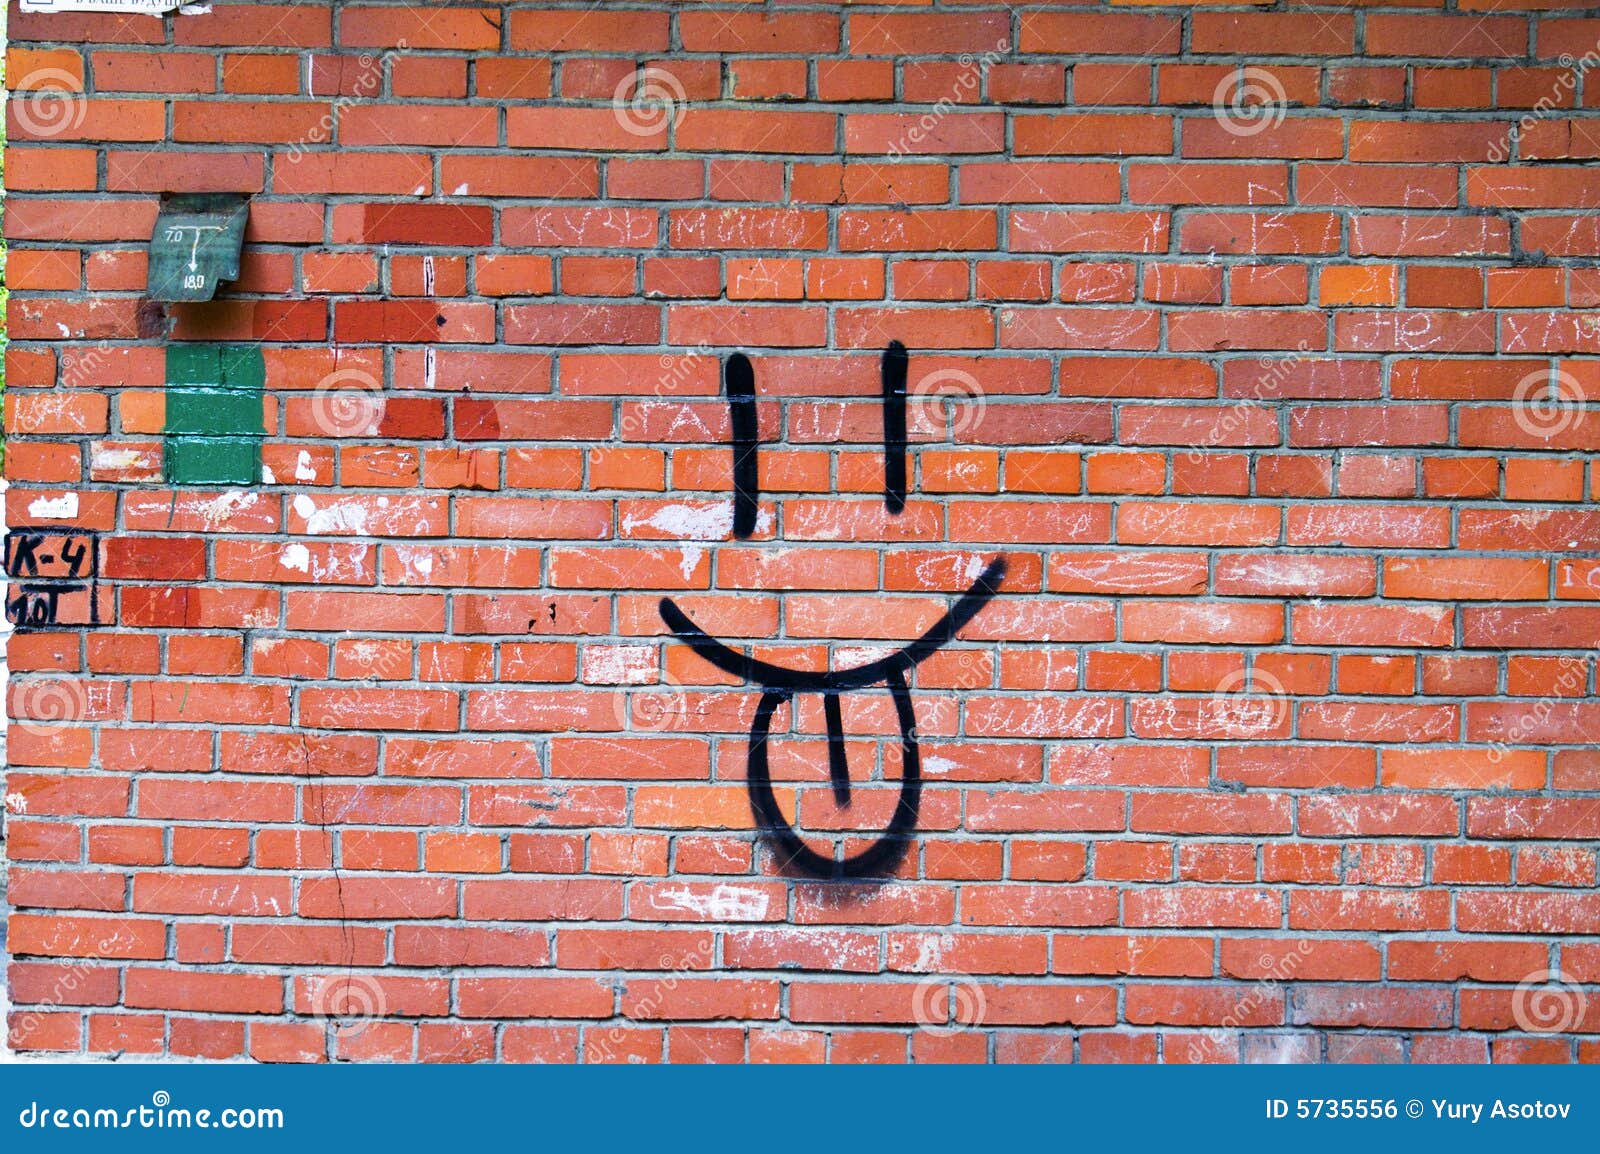 Smile Graffiti Royalty Free Stock Image - Image: 5735556